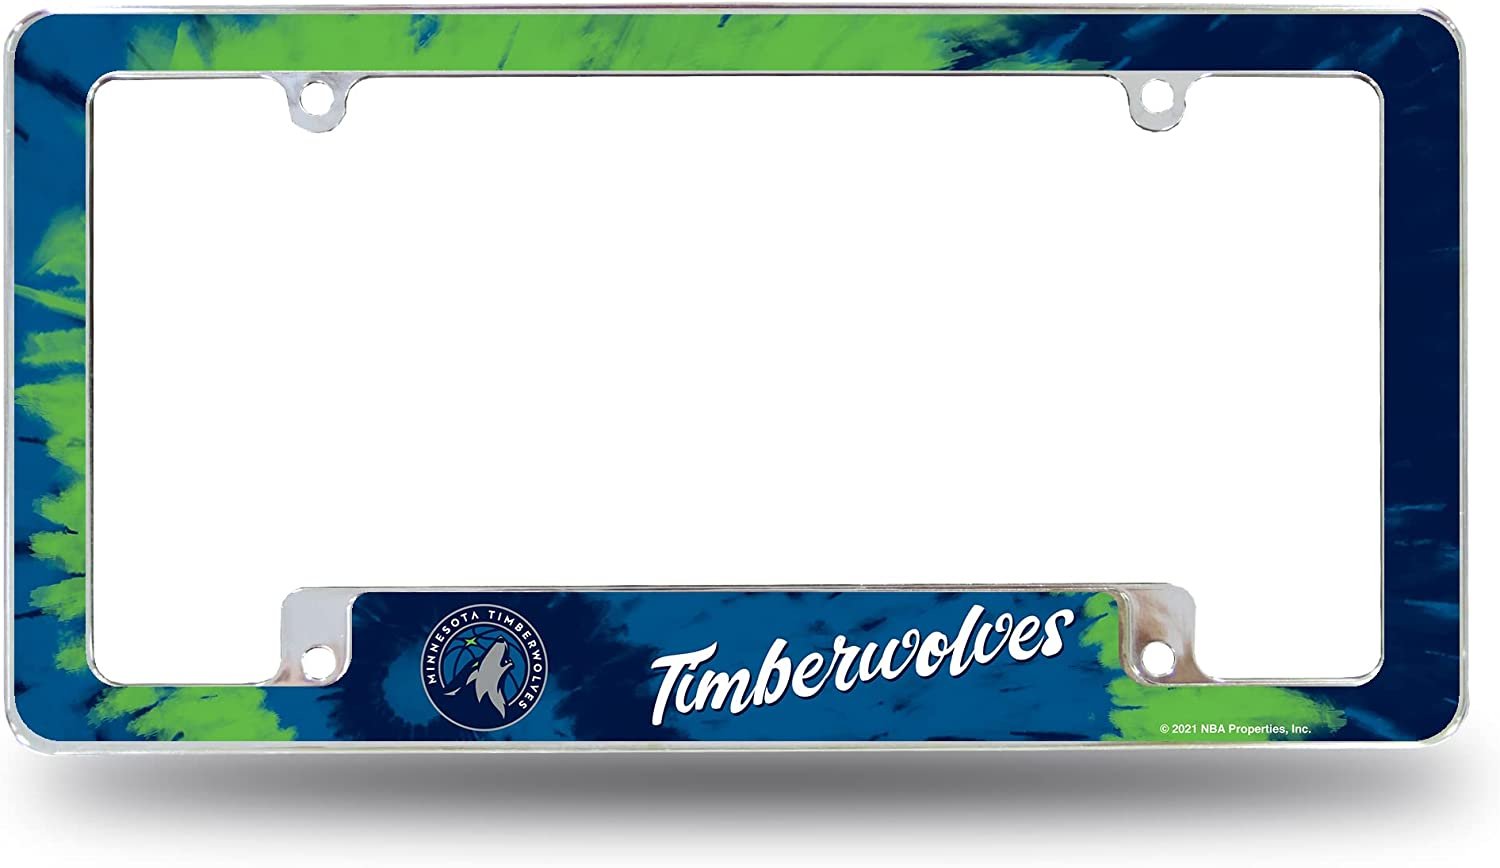 Minnesota Timberwolves Metal License Plate Frame Chrome Tag Cover Tie Dye Design 6x12 Inch